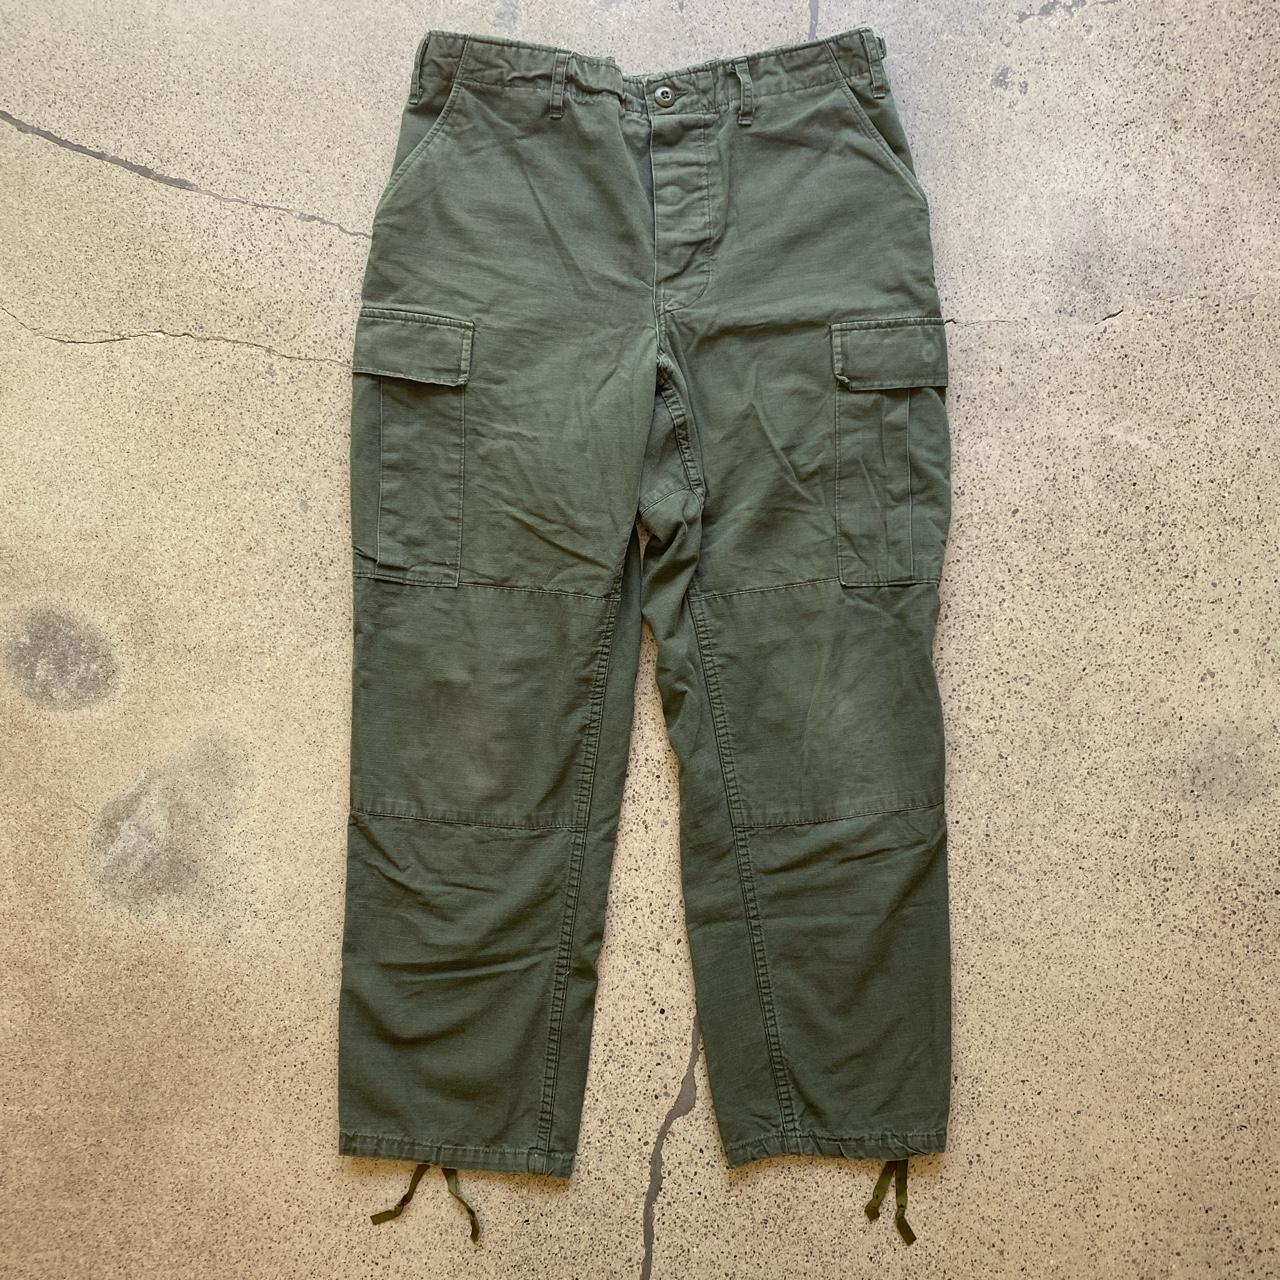 Vintage Military Cargo Pants Waist Measured Flat... - Depop